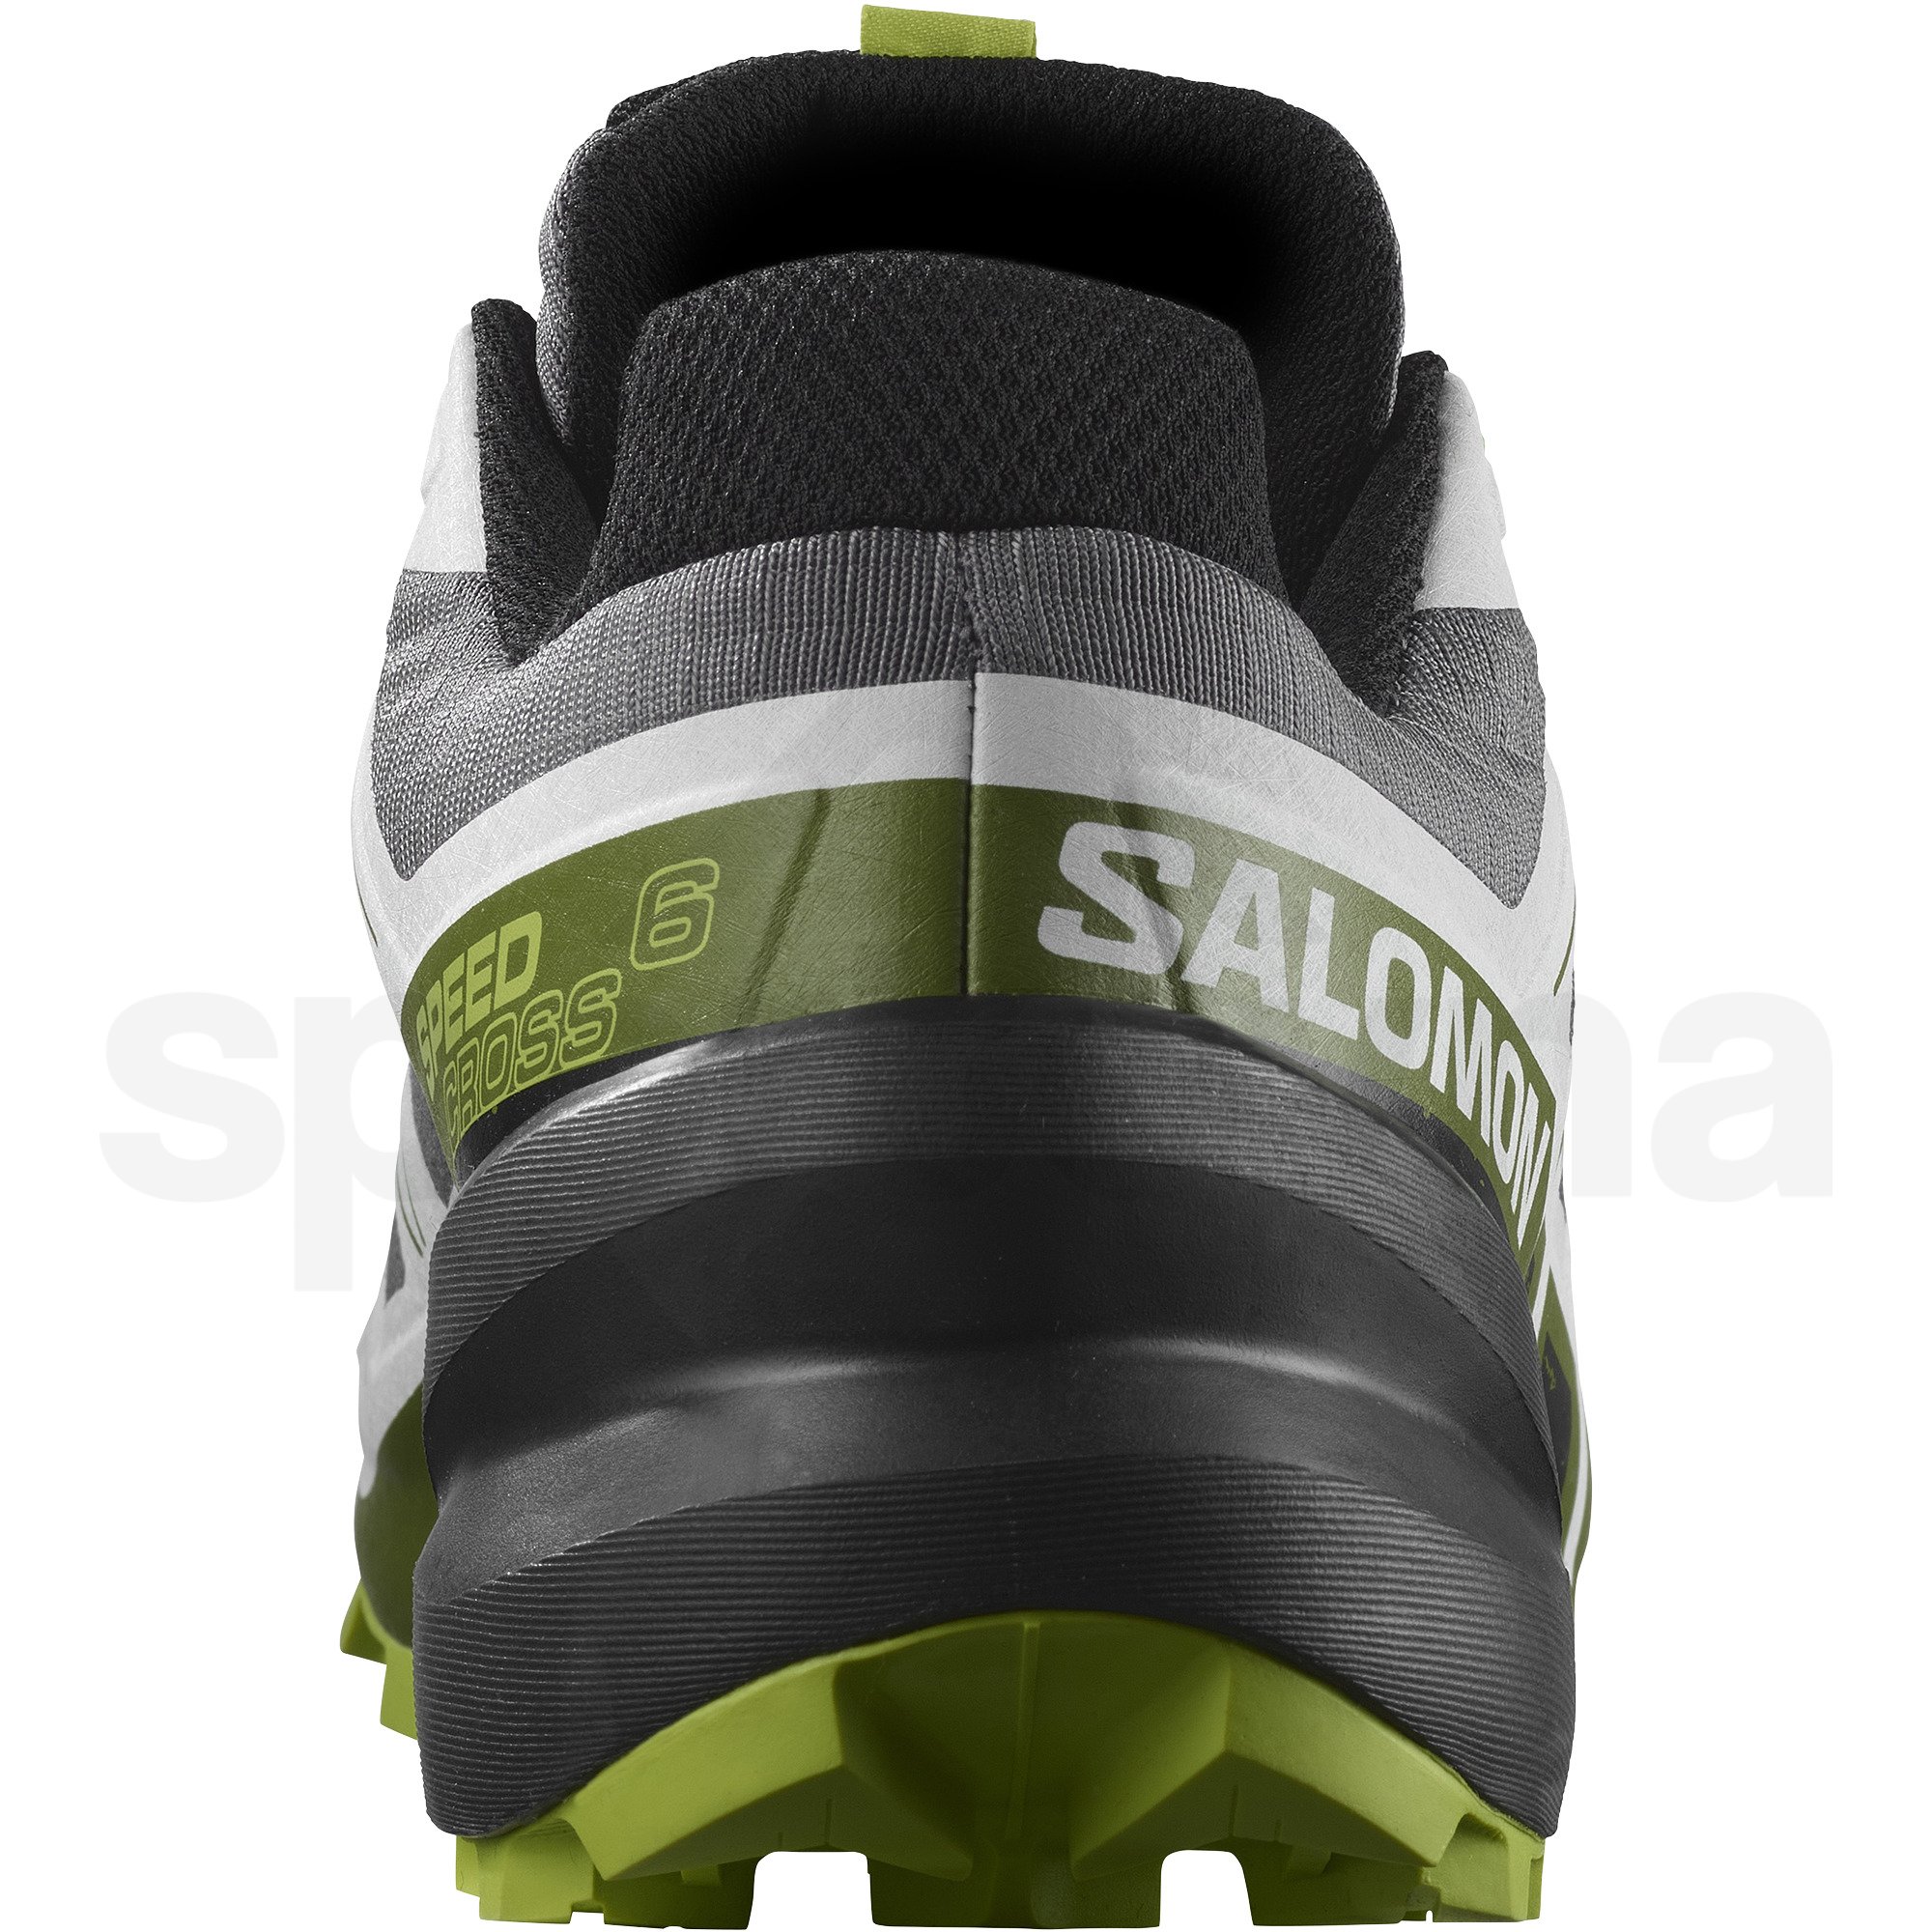 Obuv Salomon Speedcross 6 M - černá/bílá/zelená